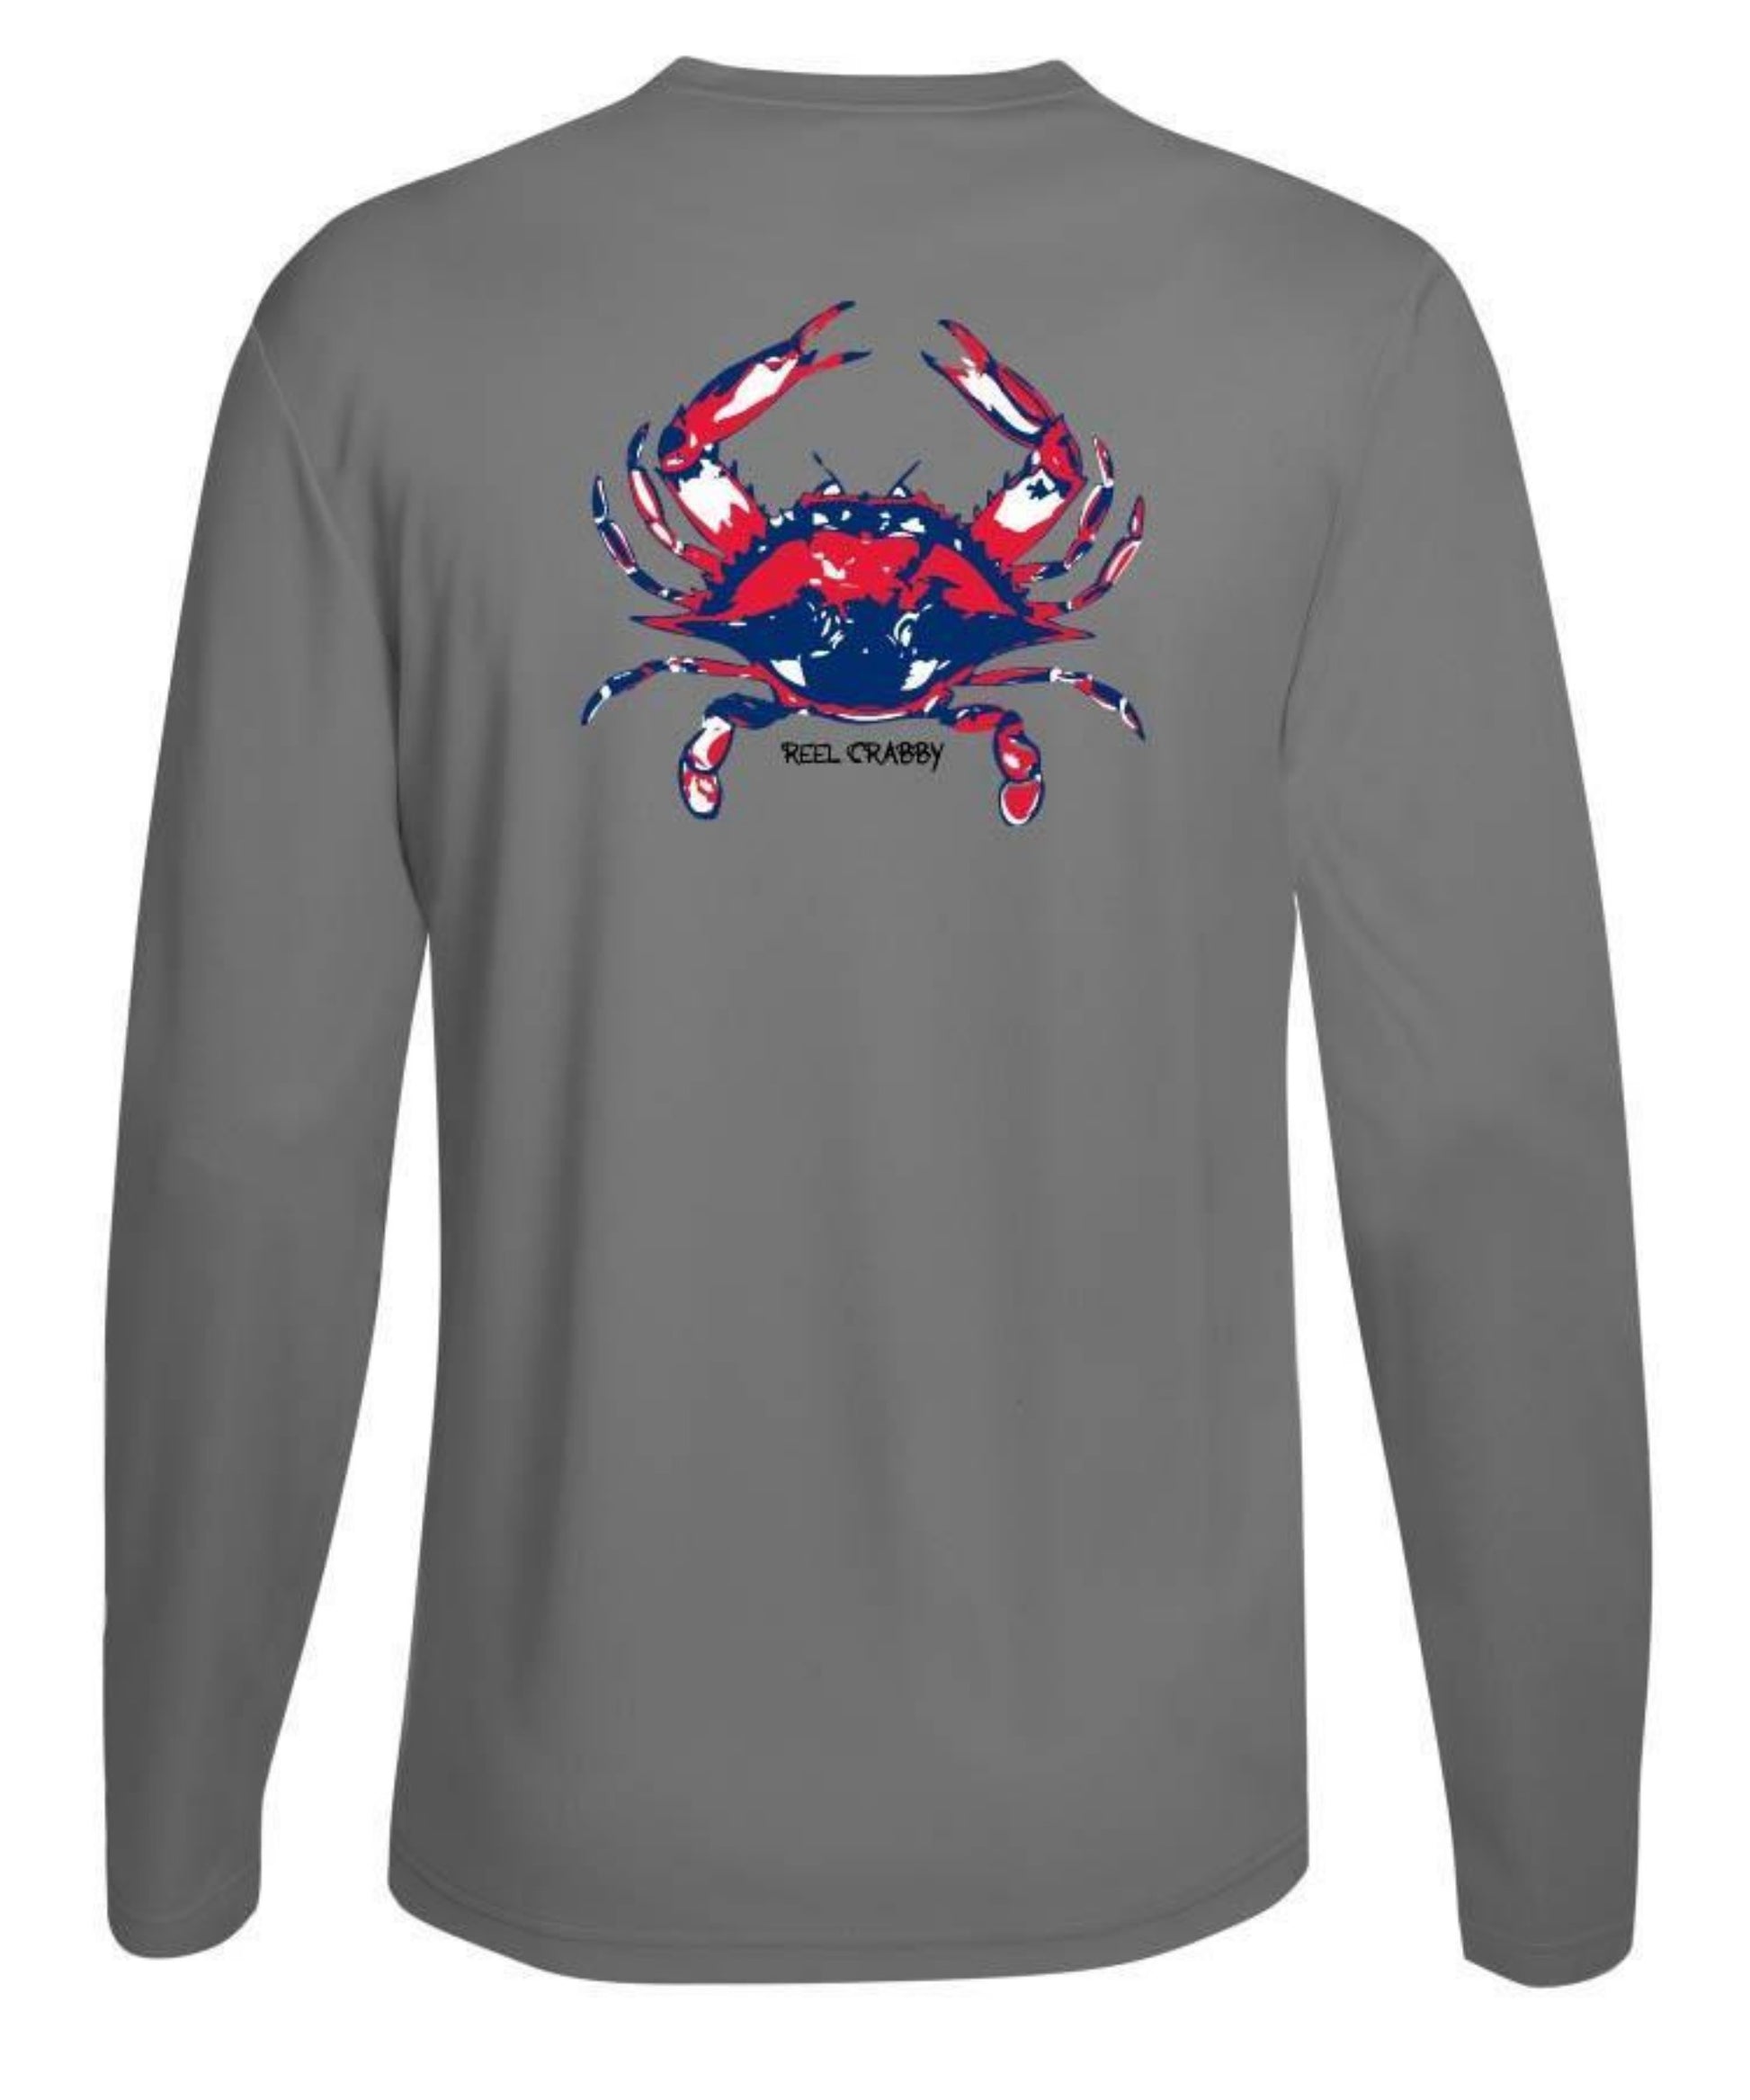 Blue Crab Reel Crabby Performance Dry-Fit Fishing 50+uv Shirt - Reel Fishy Apparel L / Gray L/S - unisex